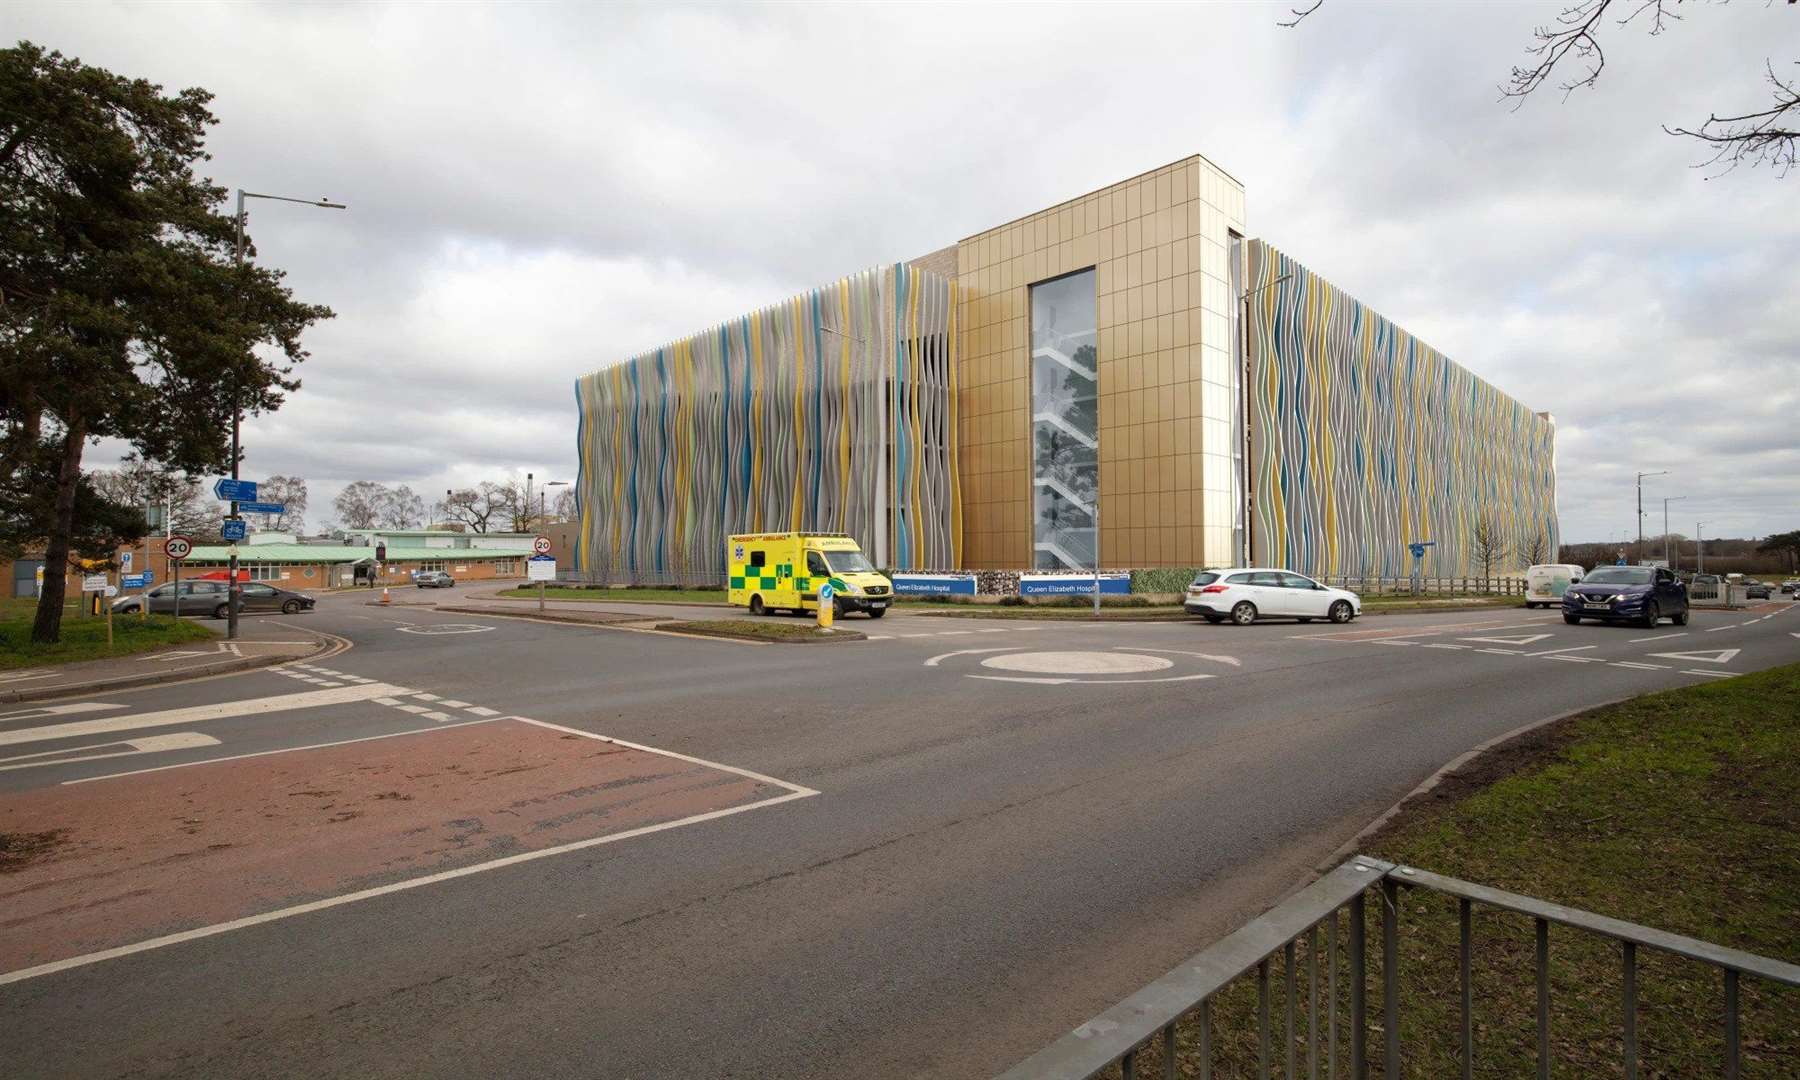 King's Lynn Queen Elizabeth Hospital’s multi-storey car park plans